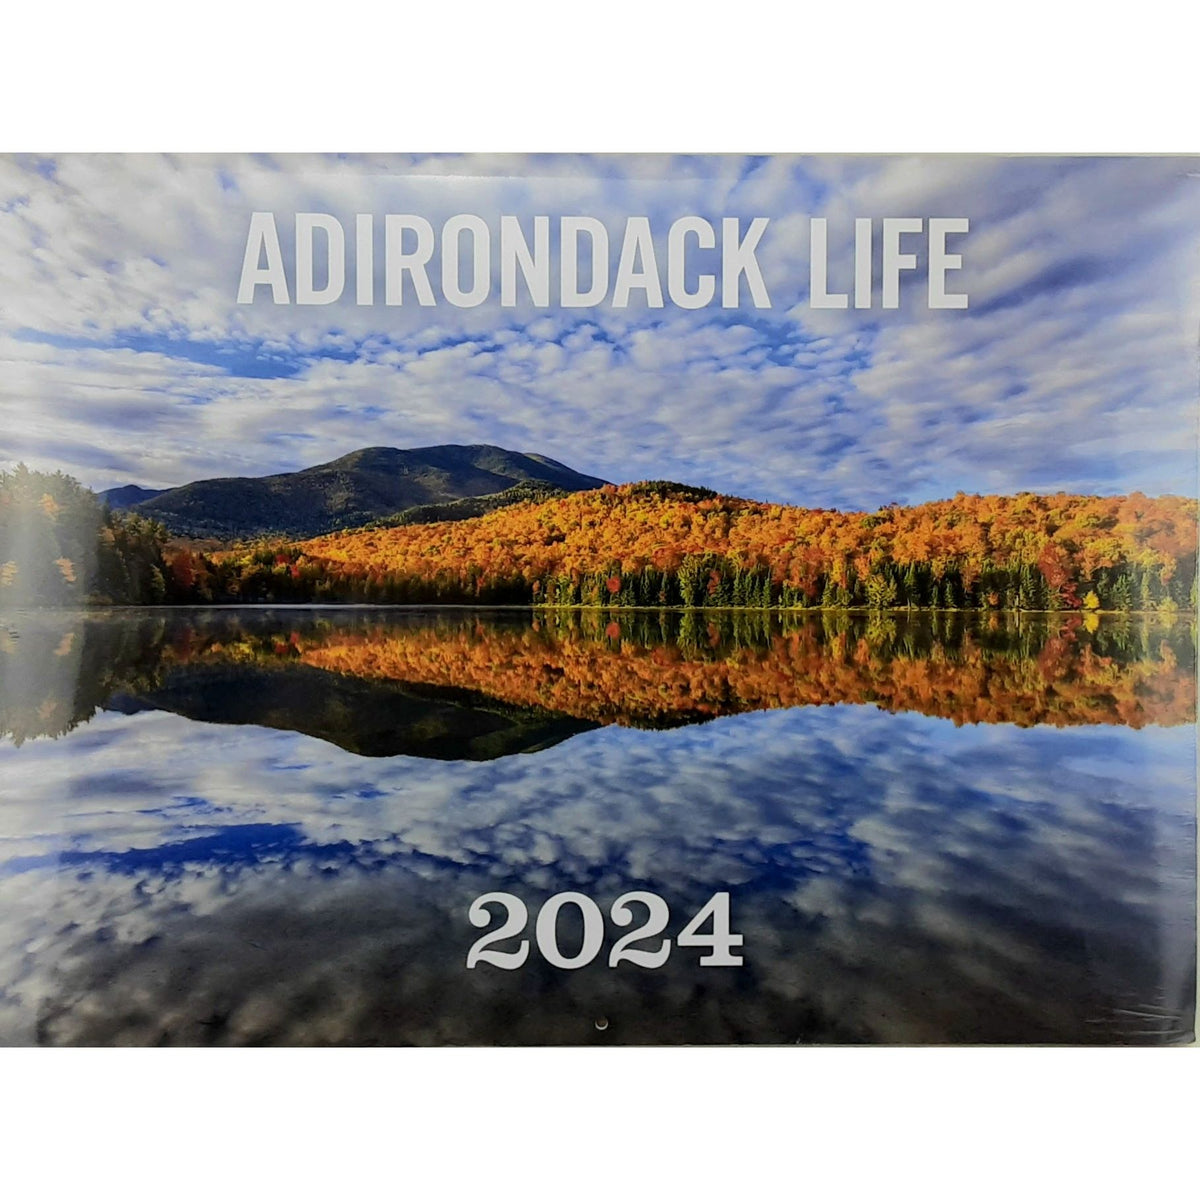 'Adirondack Life' 2024 Calendar The ADKX Store